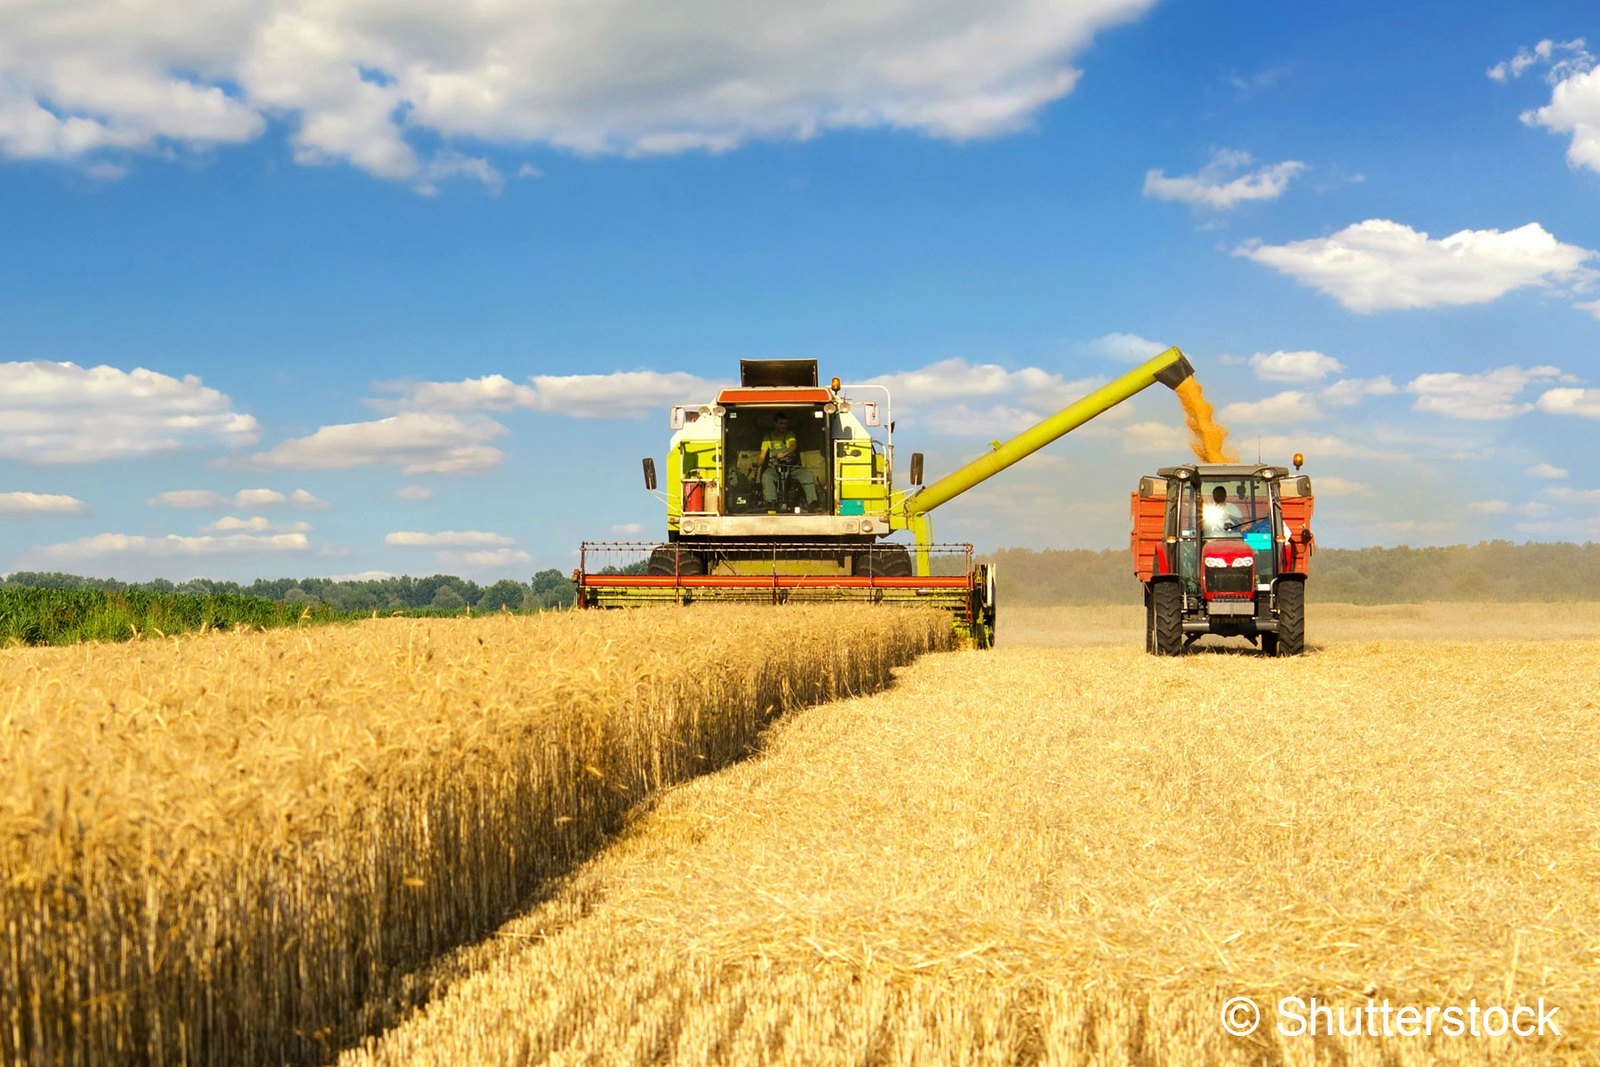 The Largest Organic Grain Fraud Scheme in U.S. History